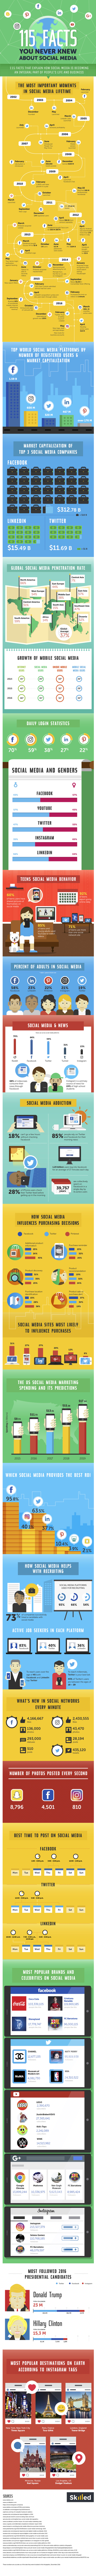 Infographic on Social Media, 2016